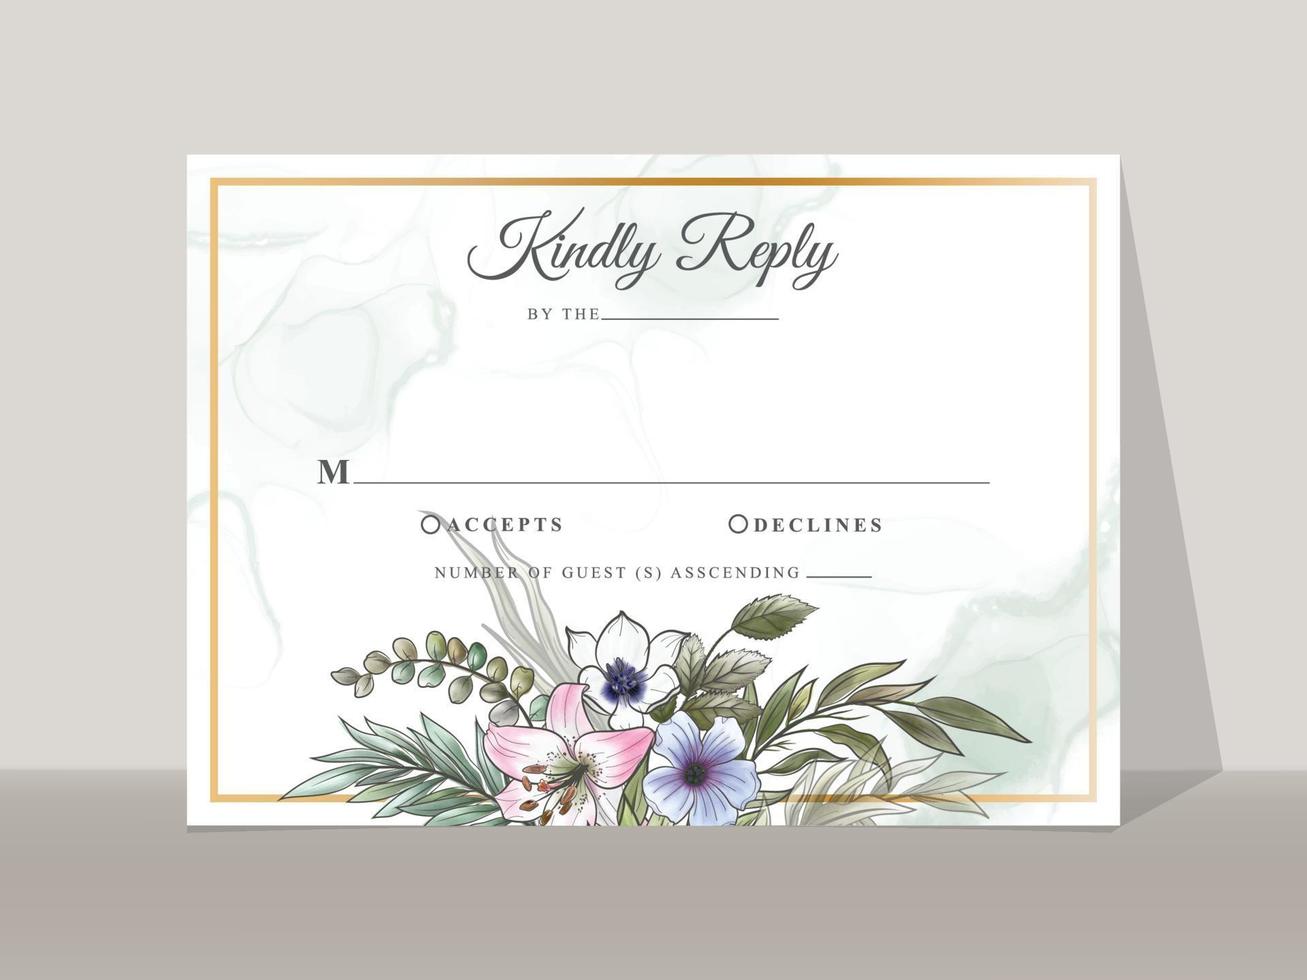 Romantic floral wedding invitations card vector